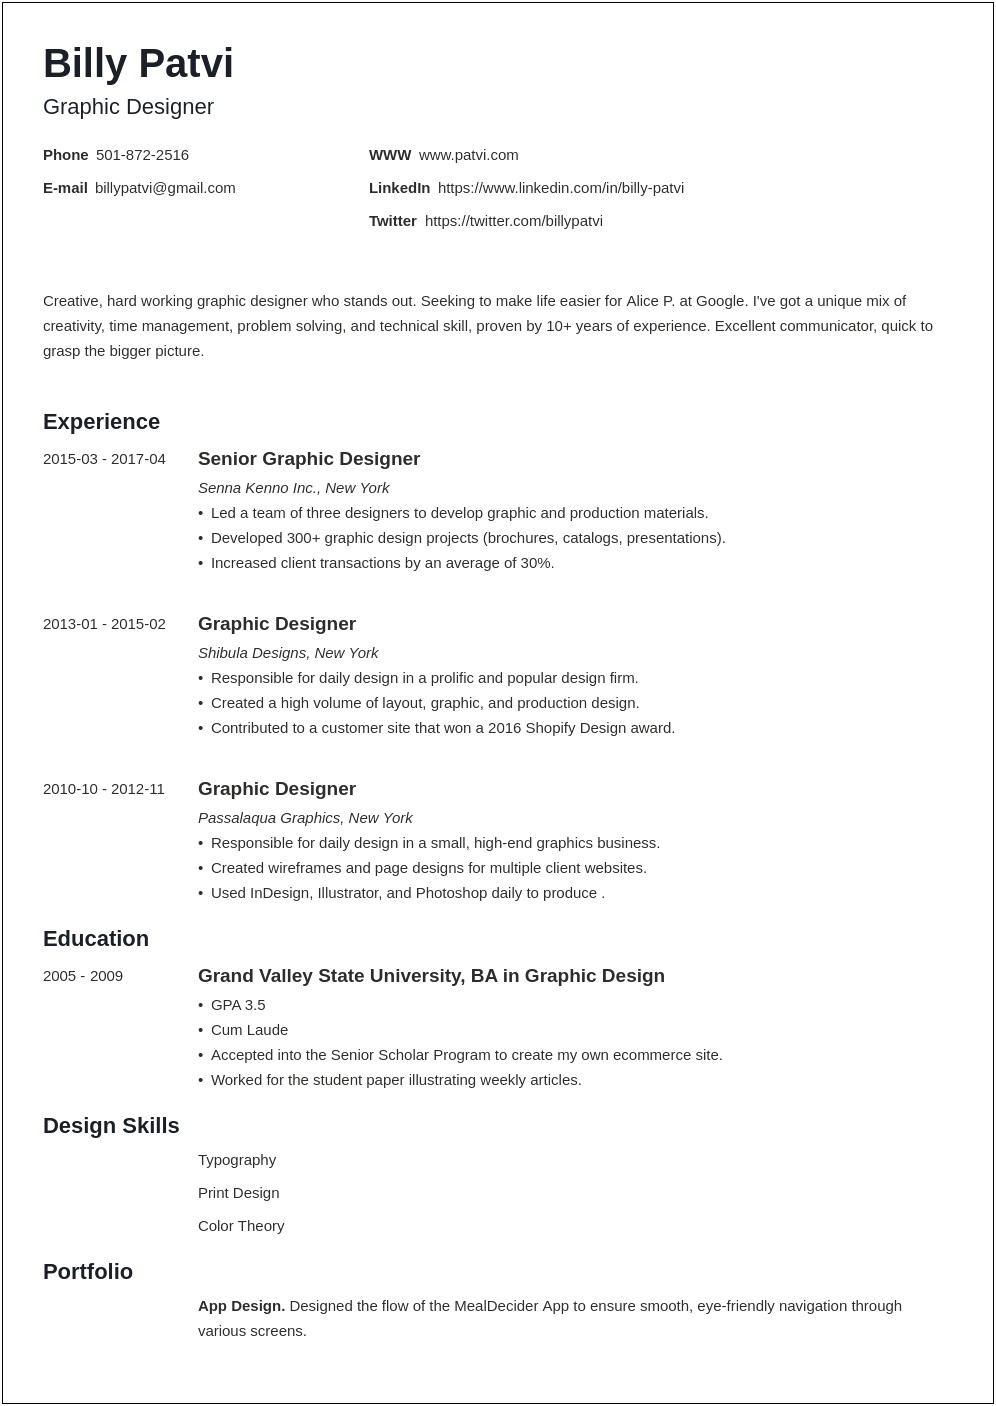 Resume Experience Sample Well Written Creative Design